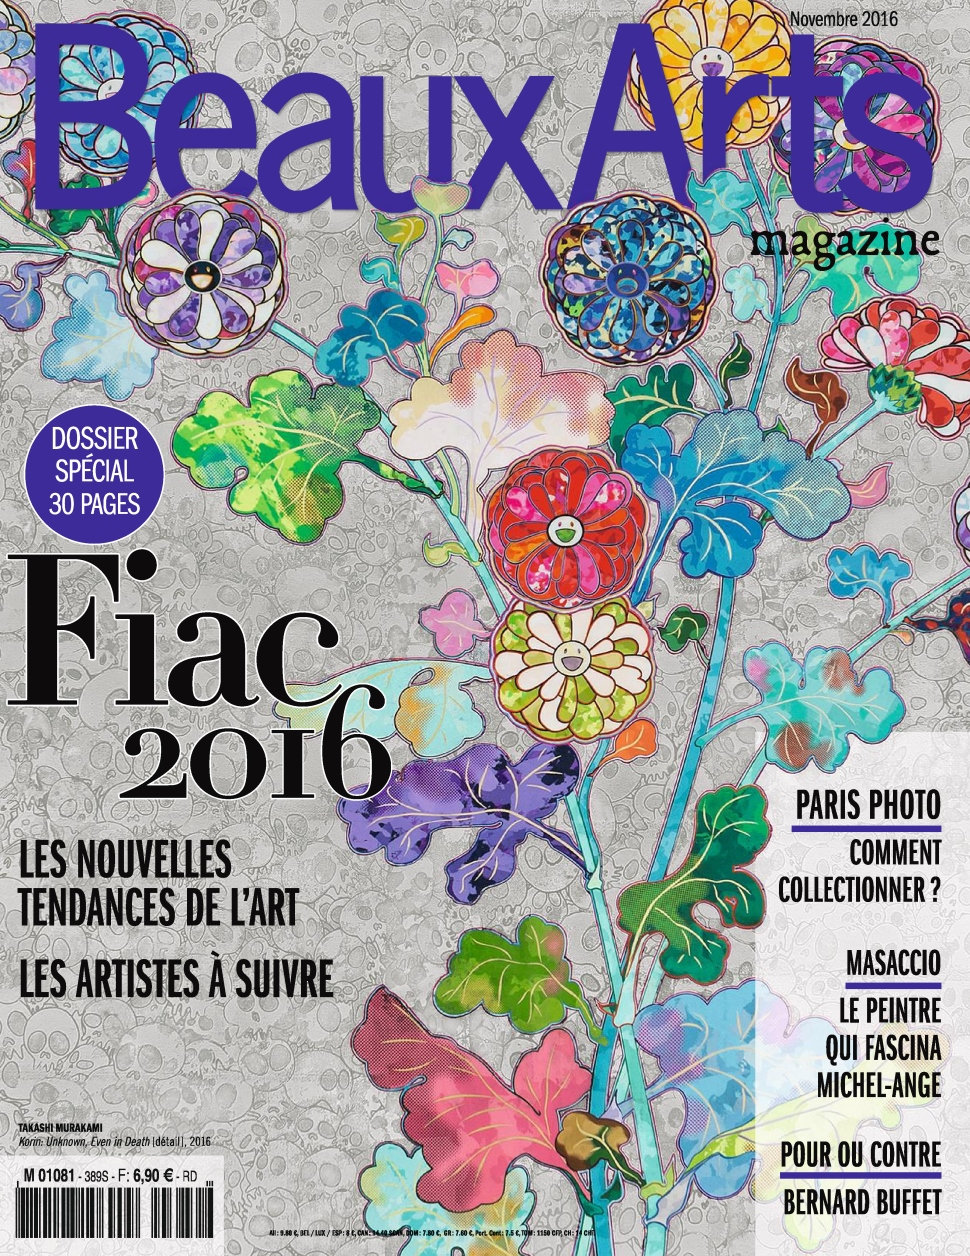 Beaux Arts magazine N°389 - Novembre 2016